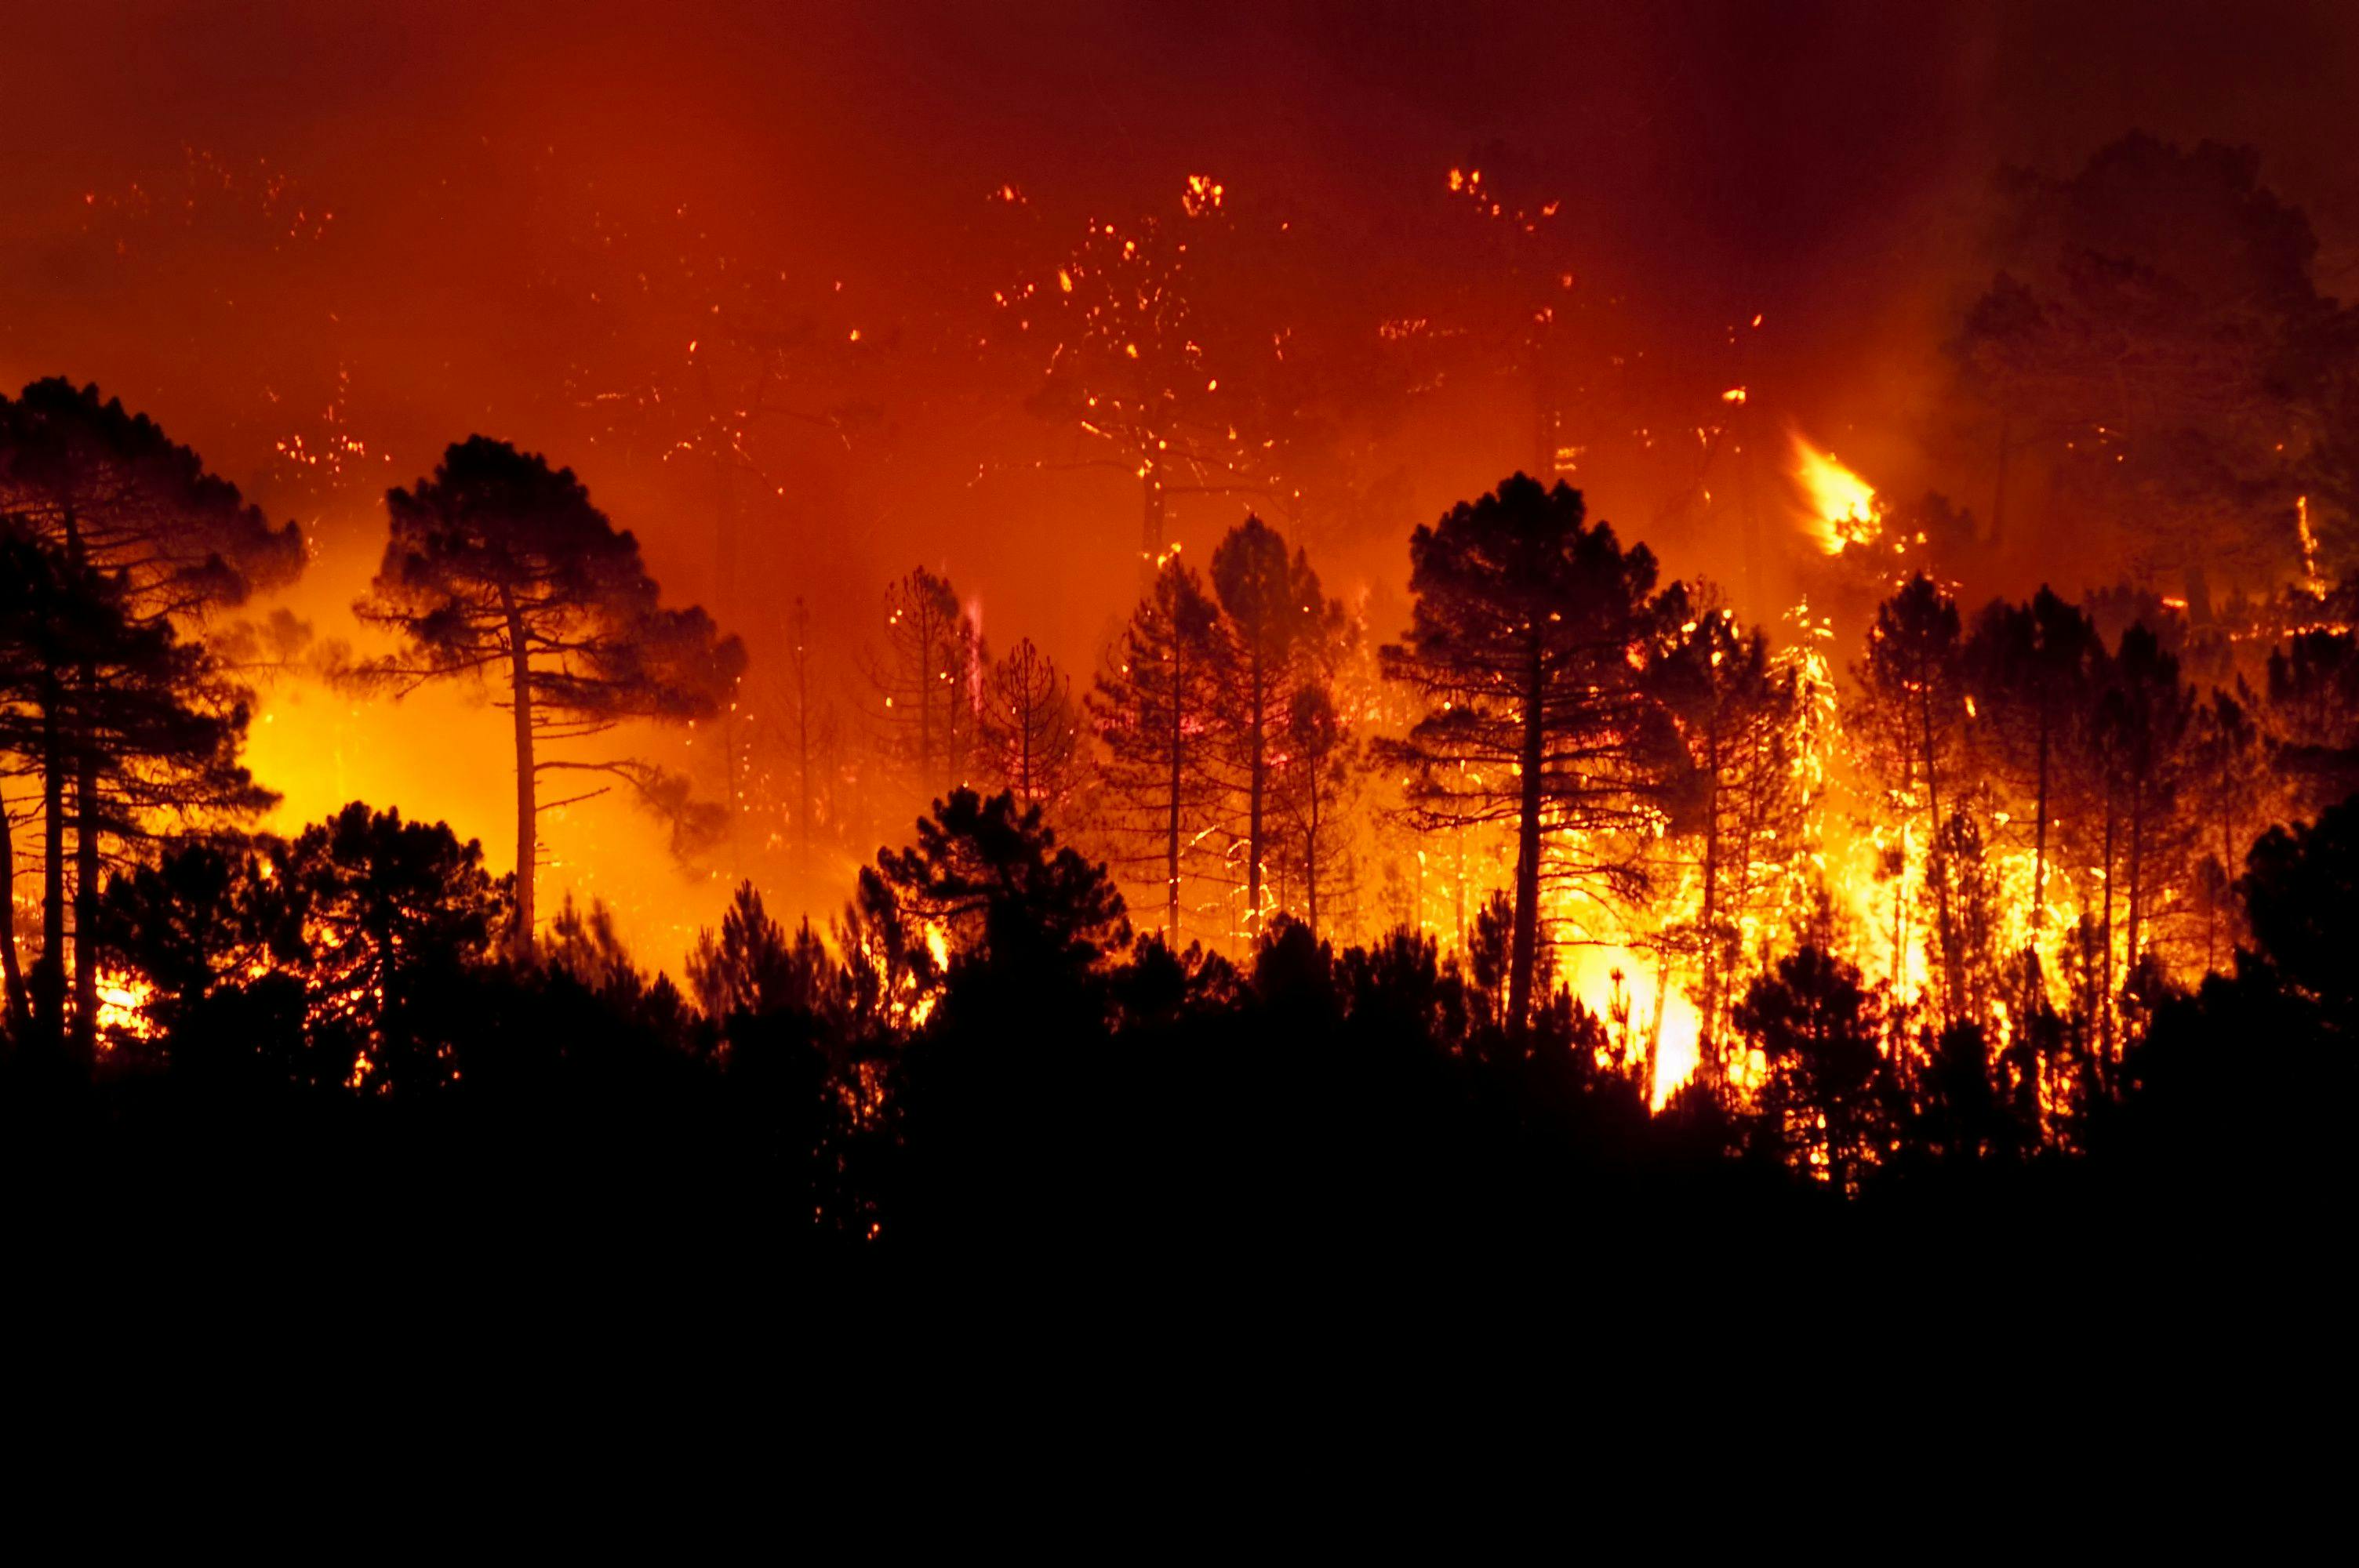 Wildfires | Image Credit: JAH - stock.adobe.com